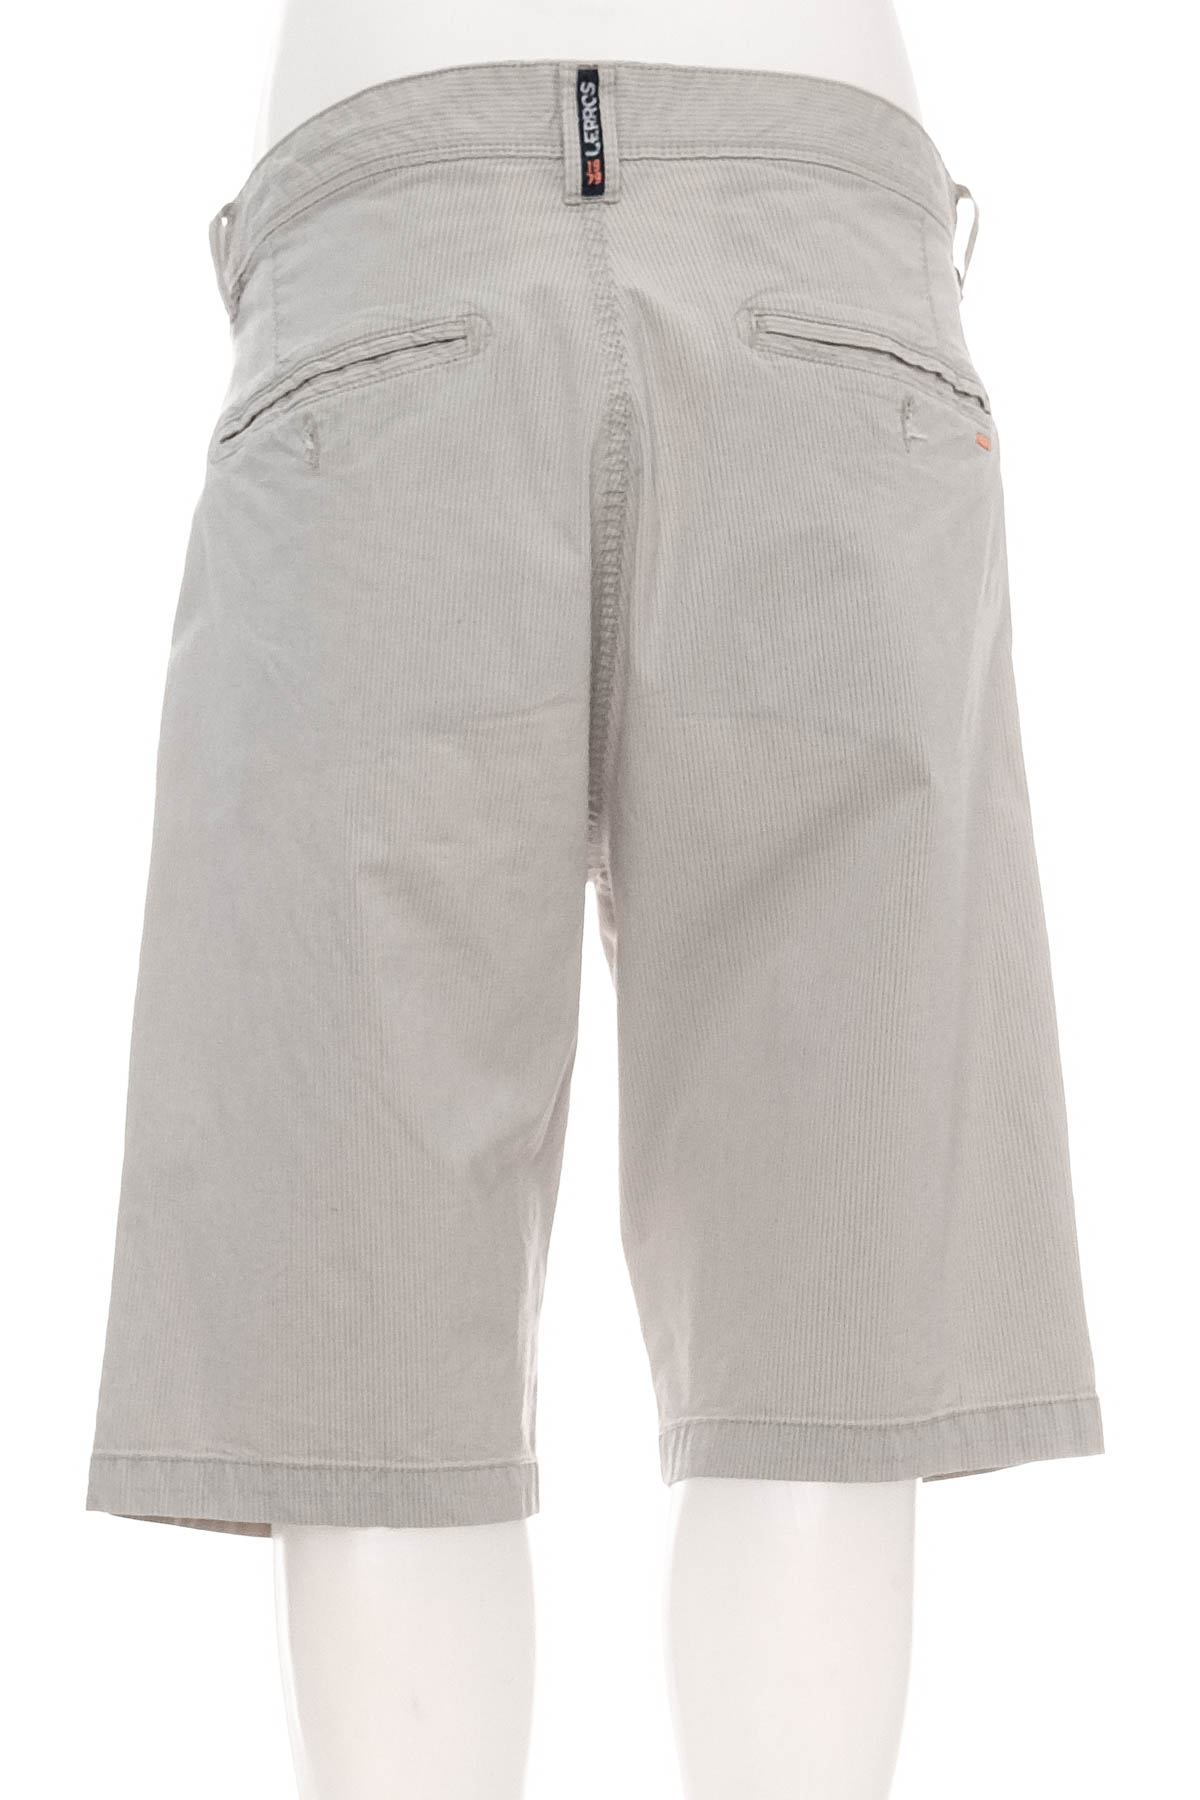 Men's shorts - Lerros - 1